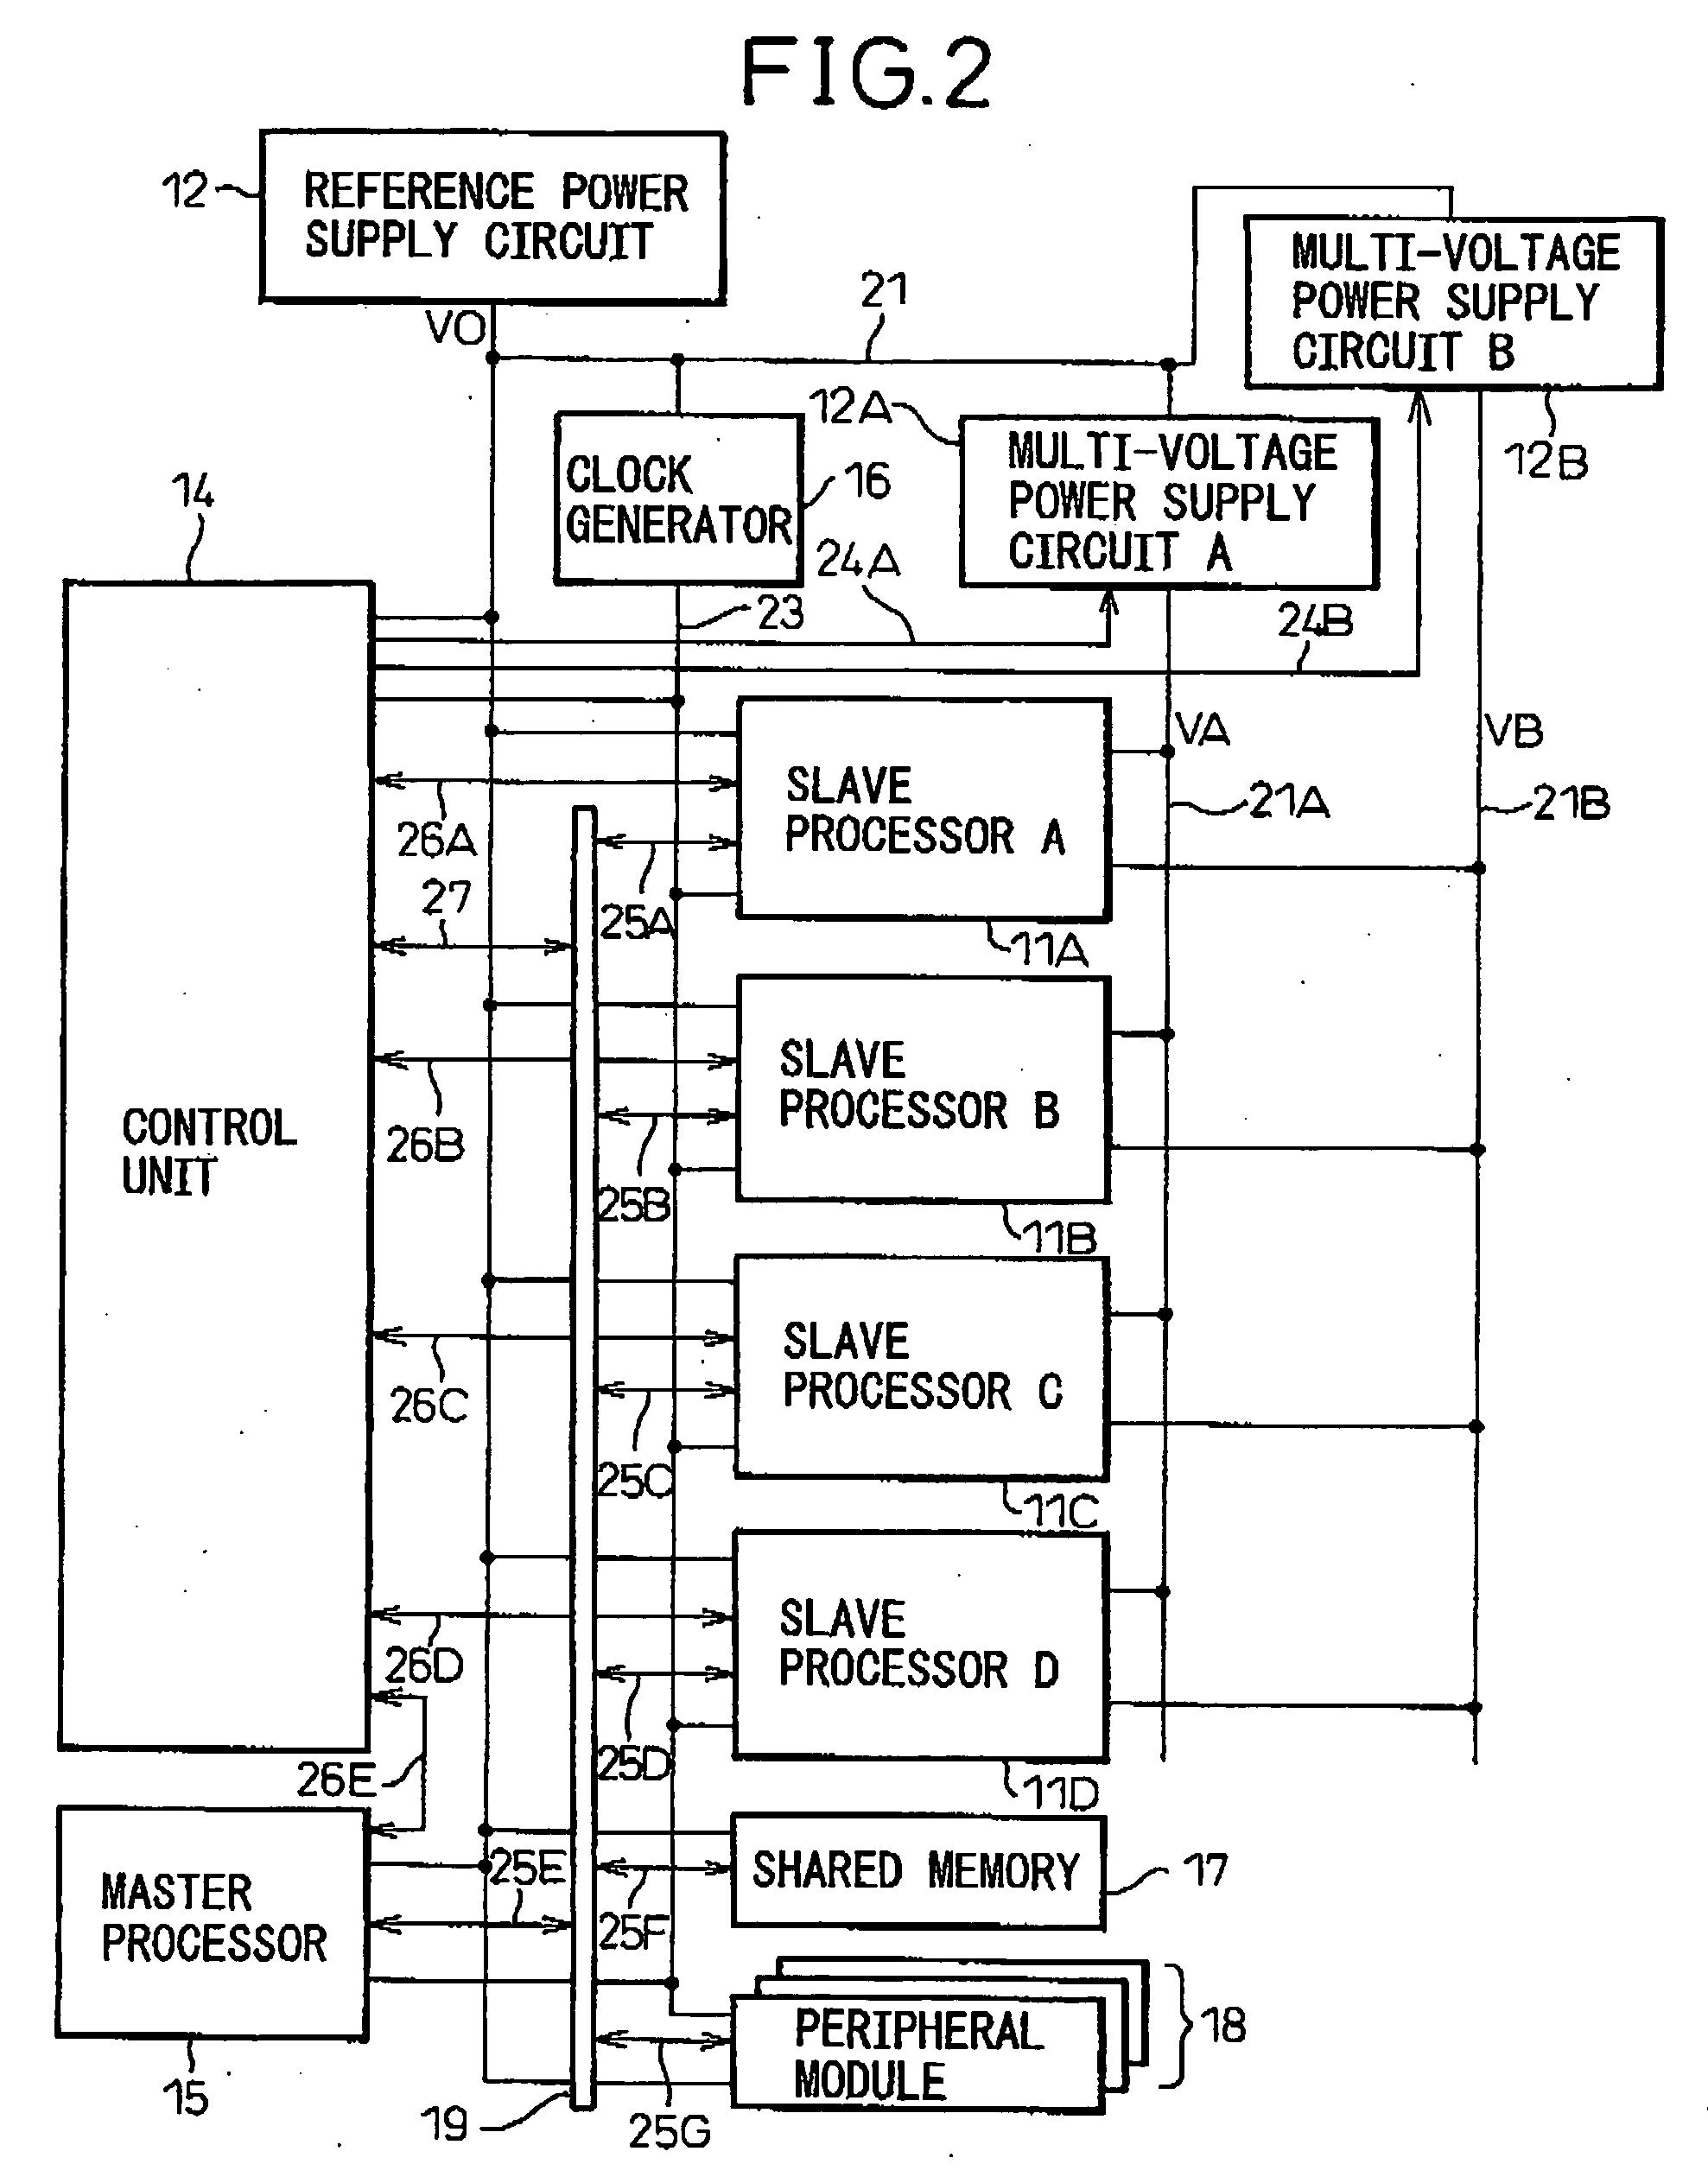 Circuit system